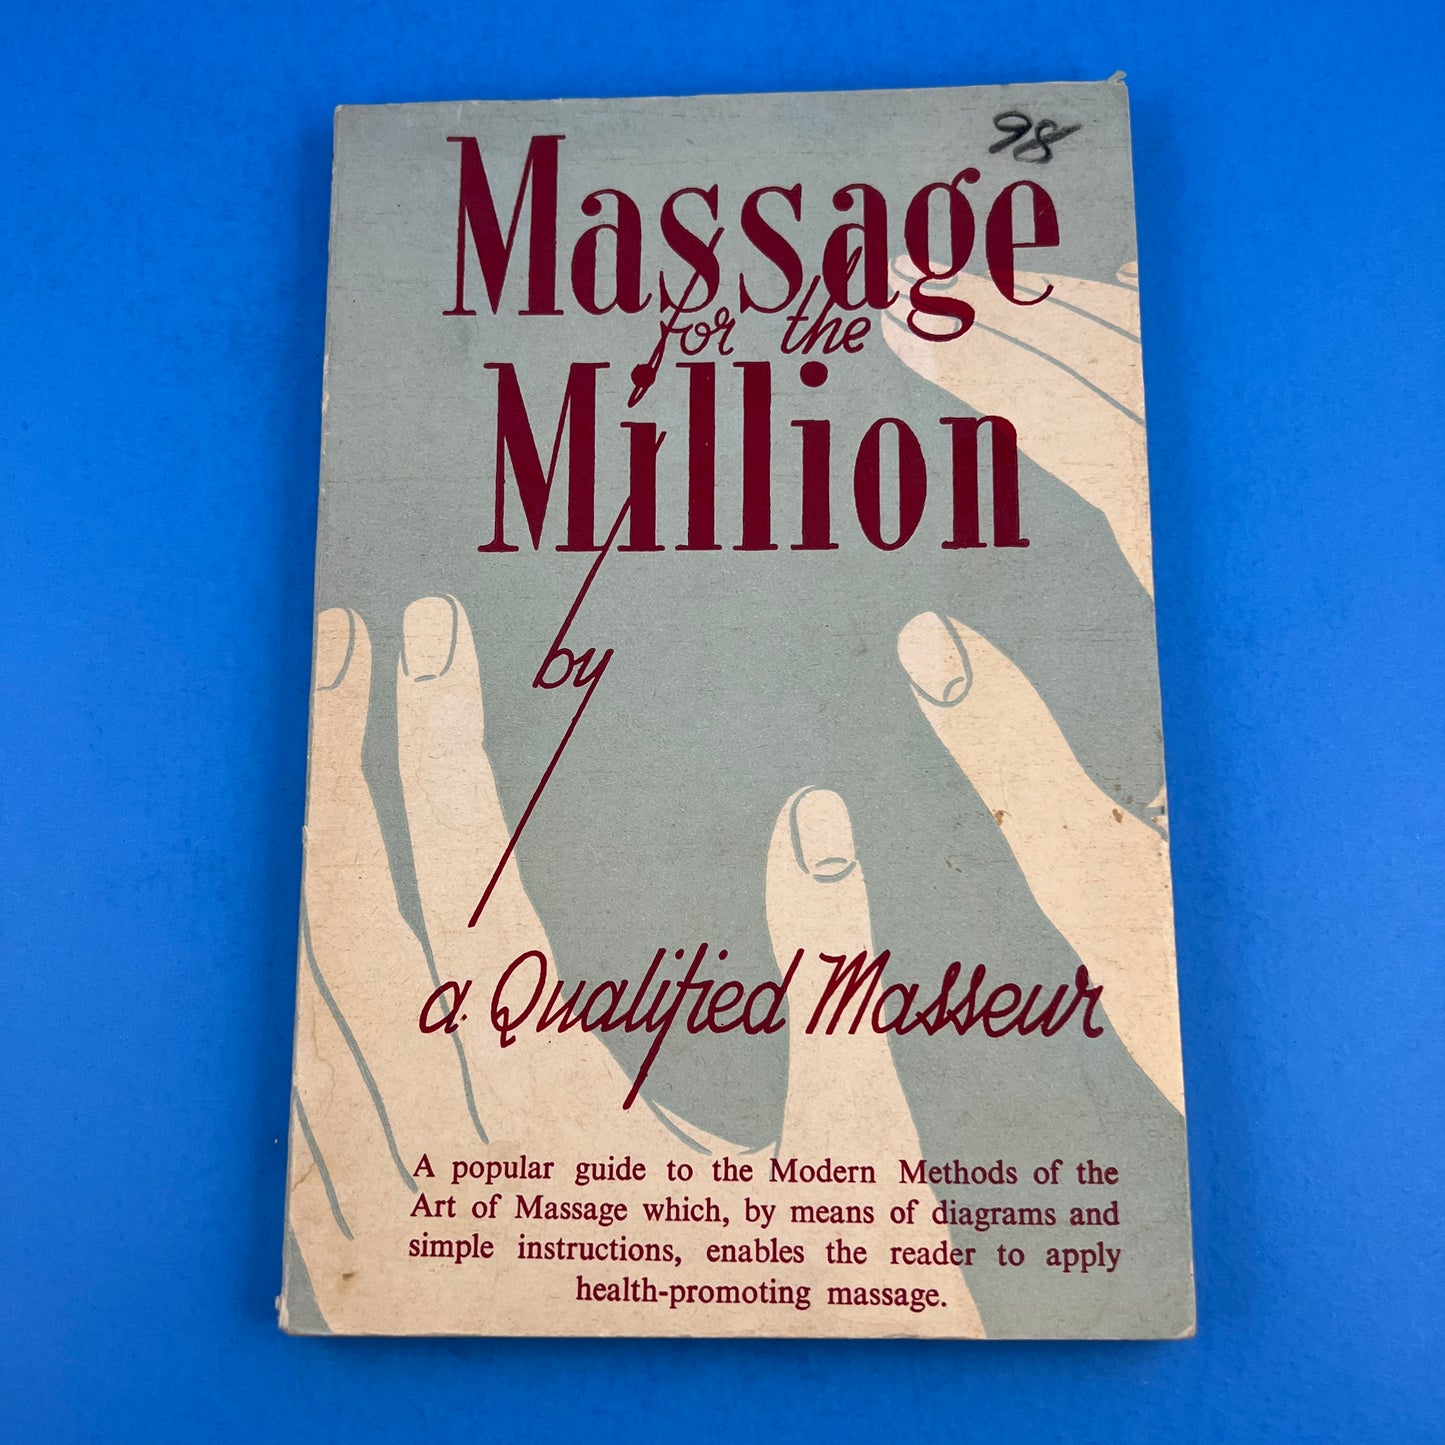 Massage for the Million